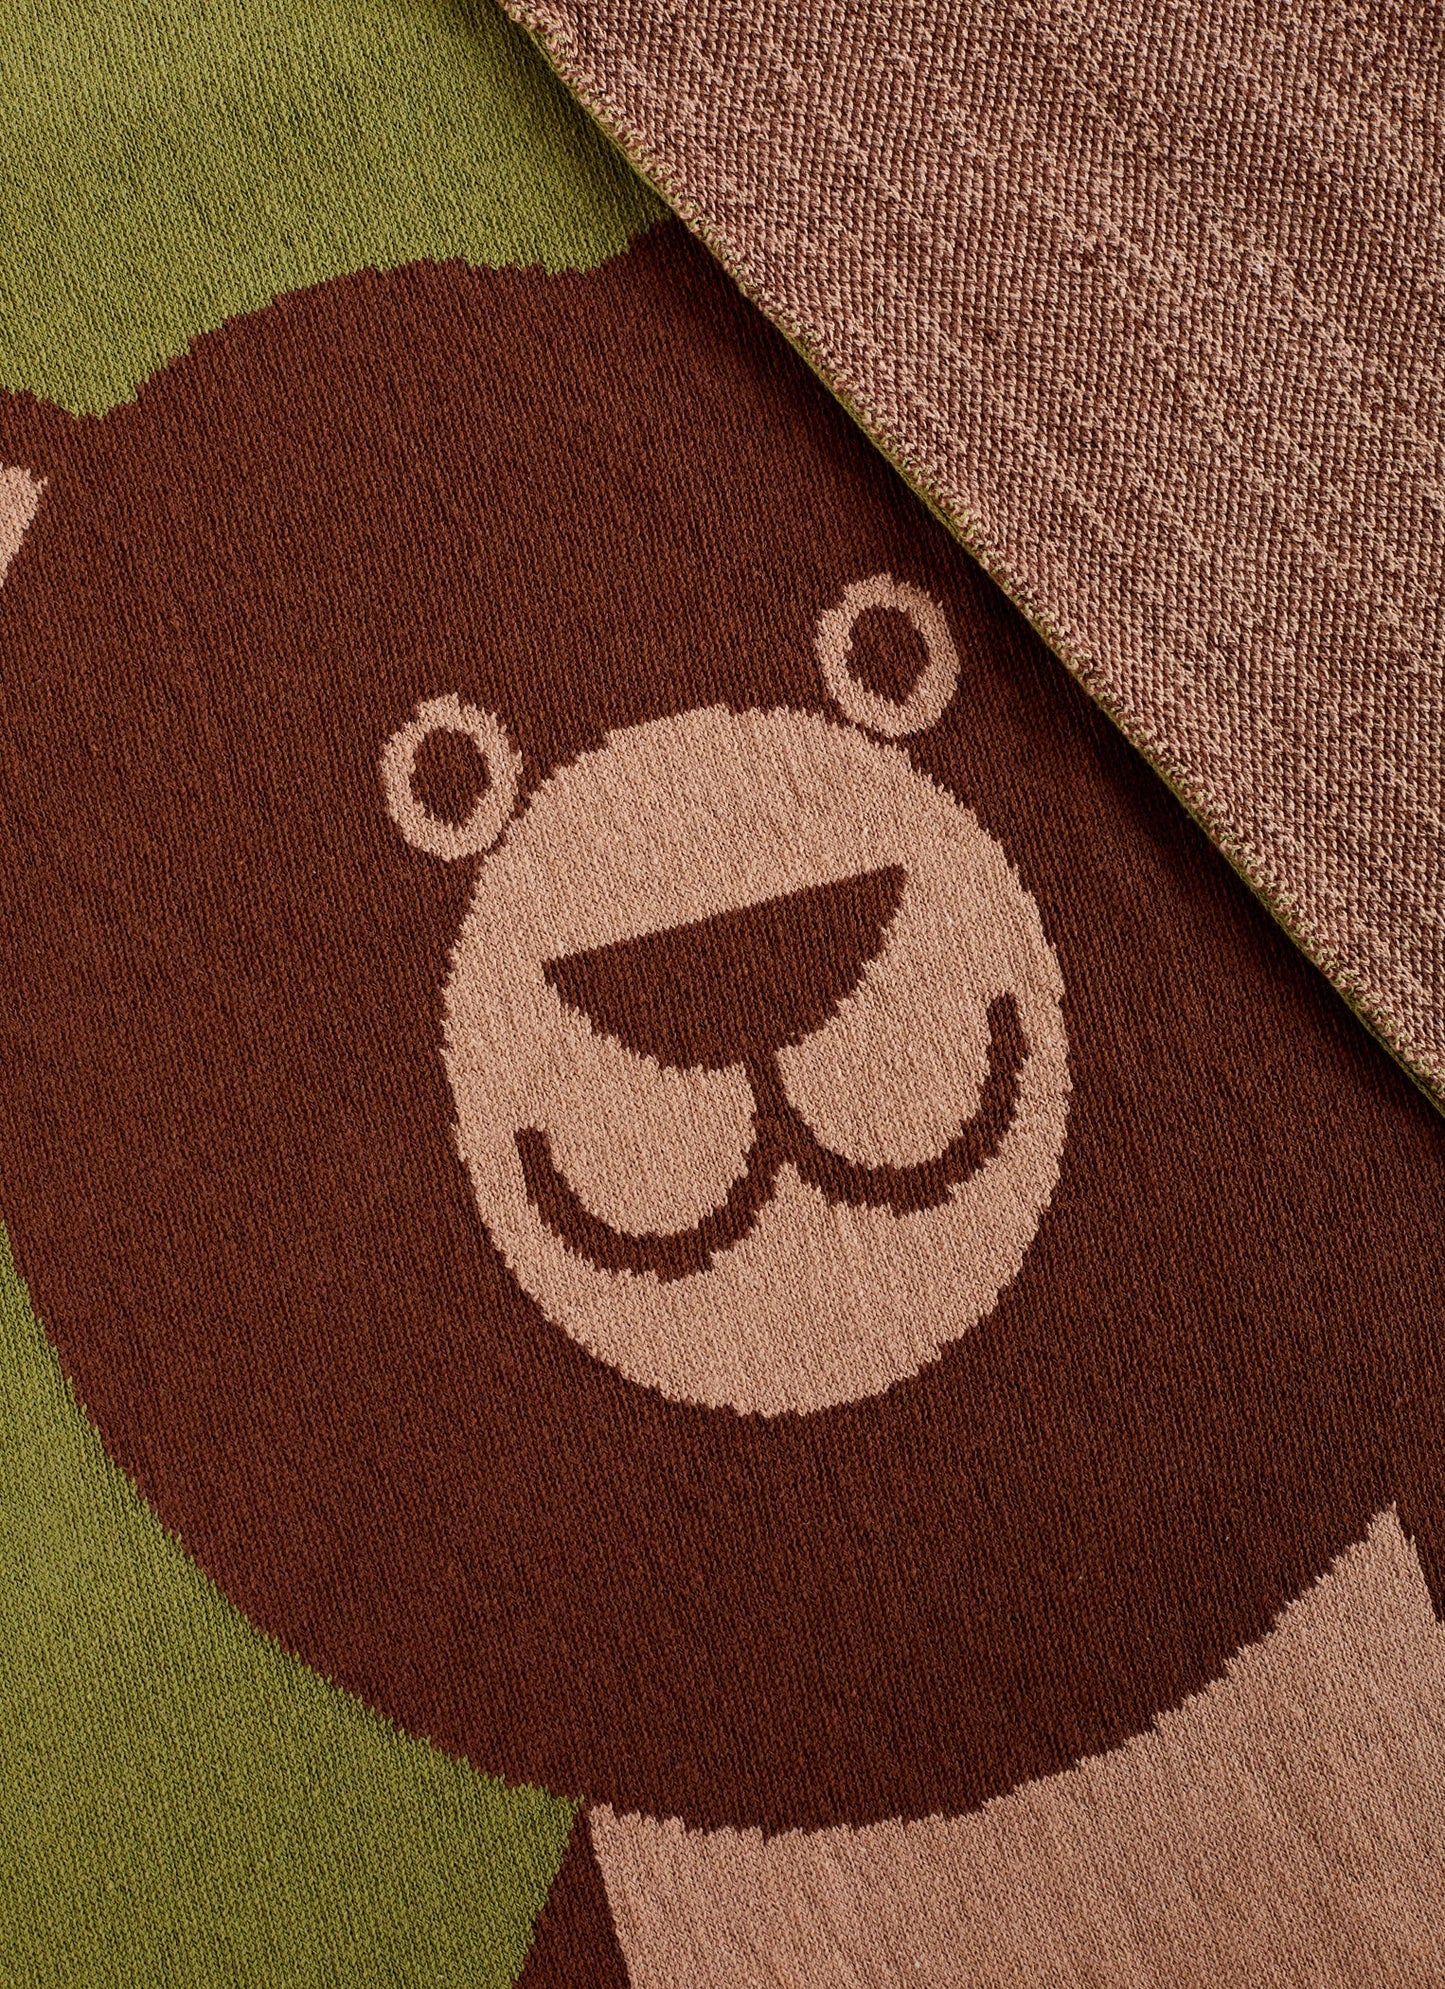 Bear blanket Blankets Bibu 